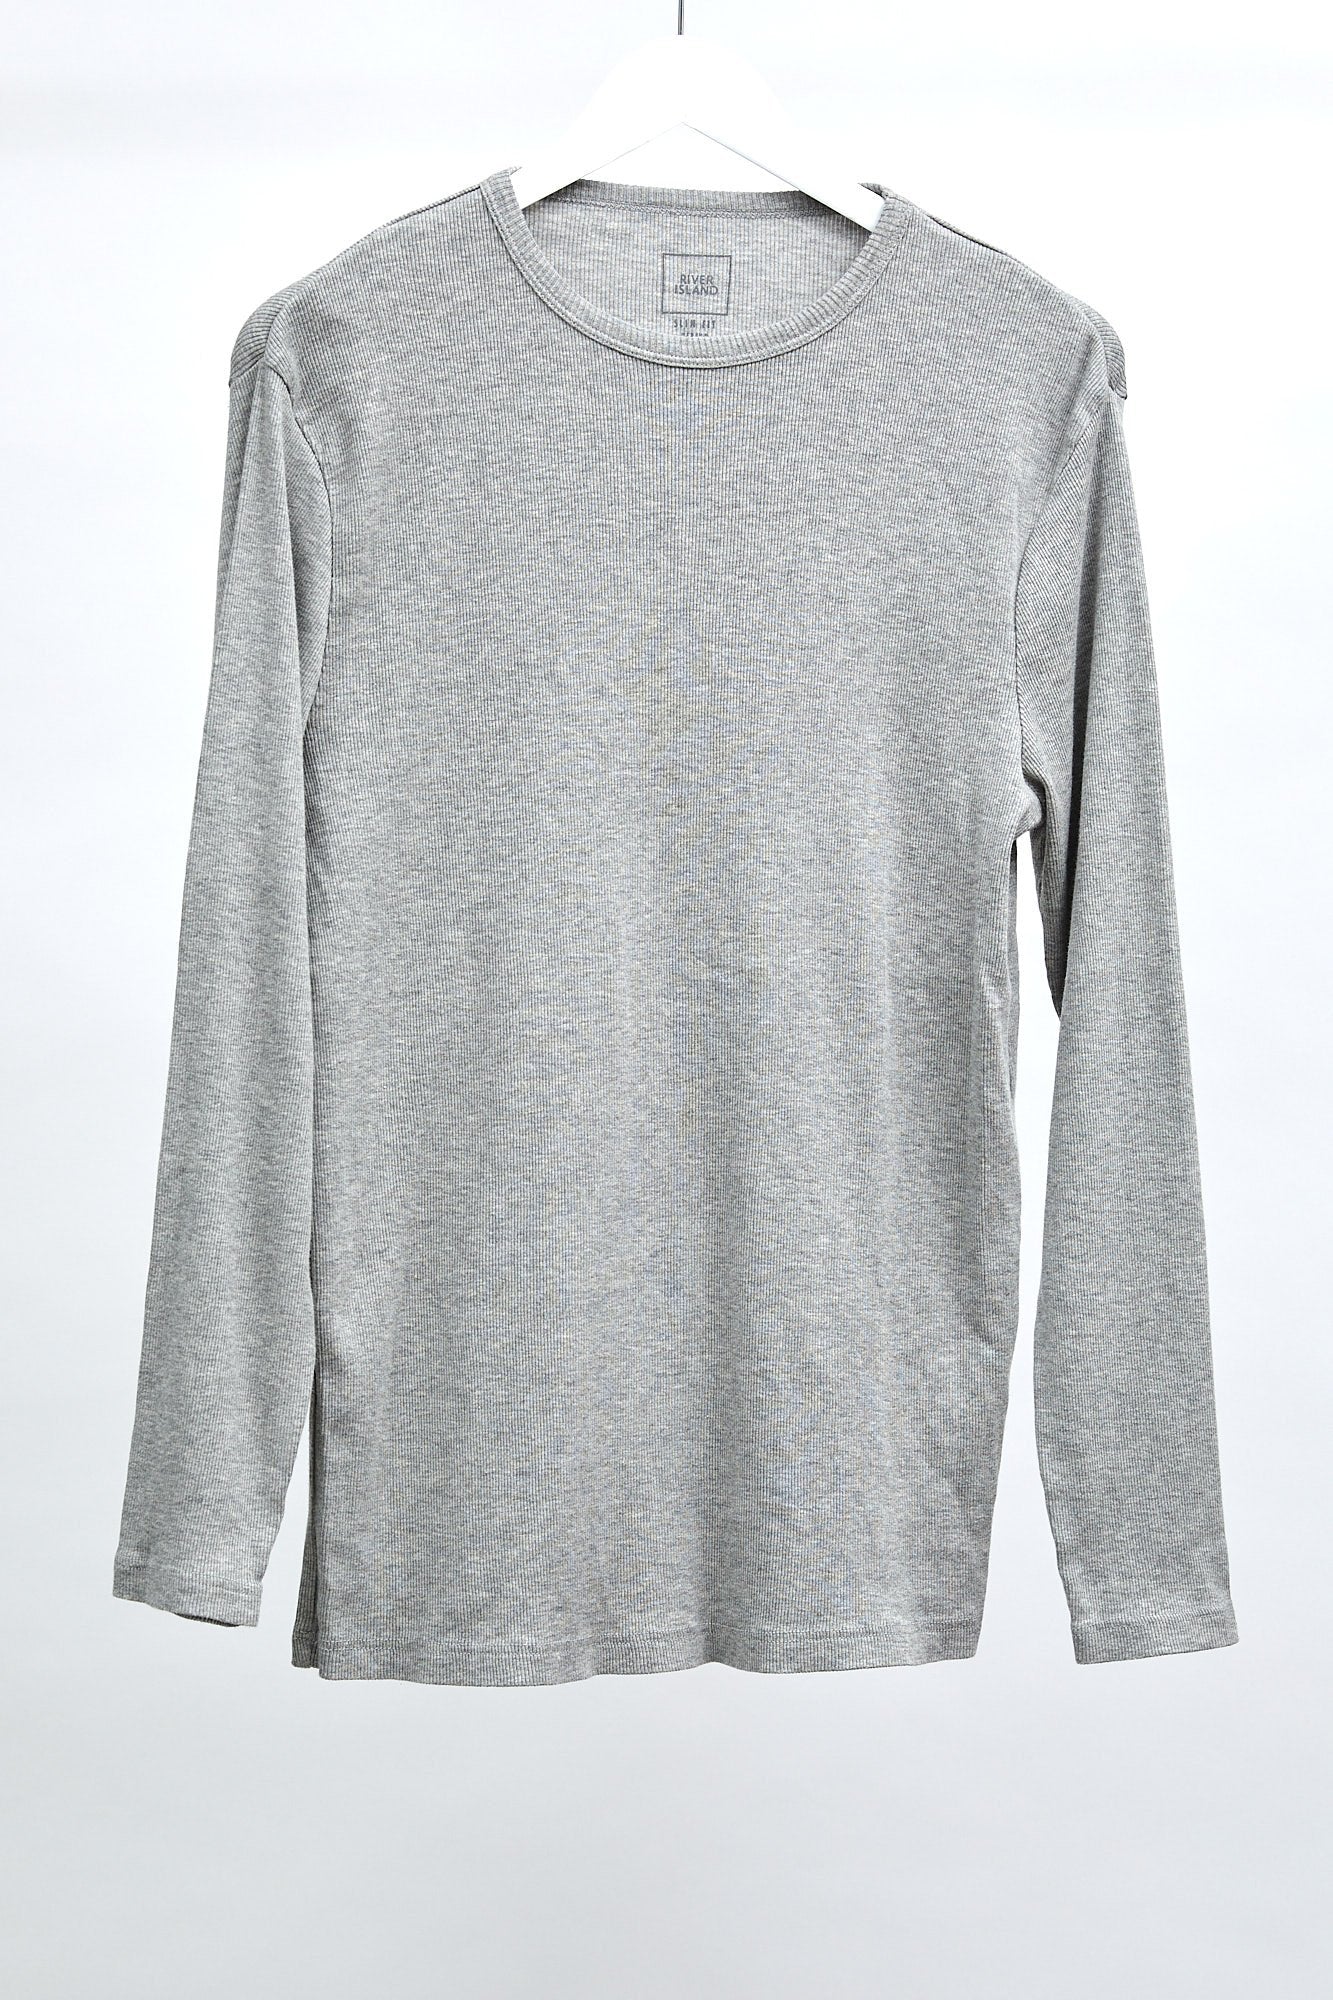 Mens River Island Grey Long Sleeved T-Shirt: Size Medium